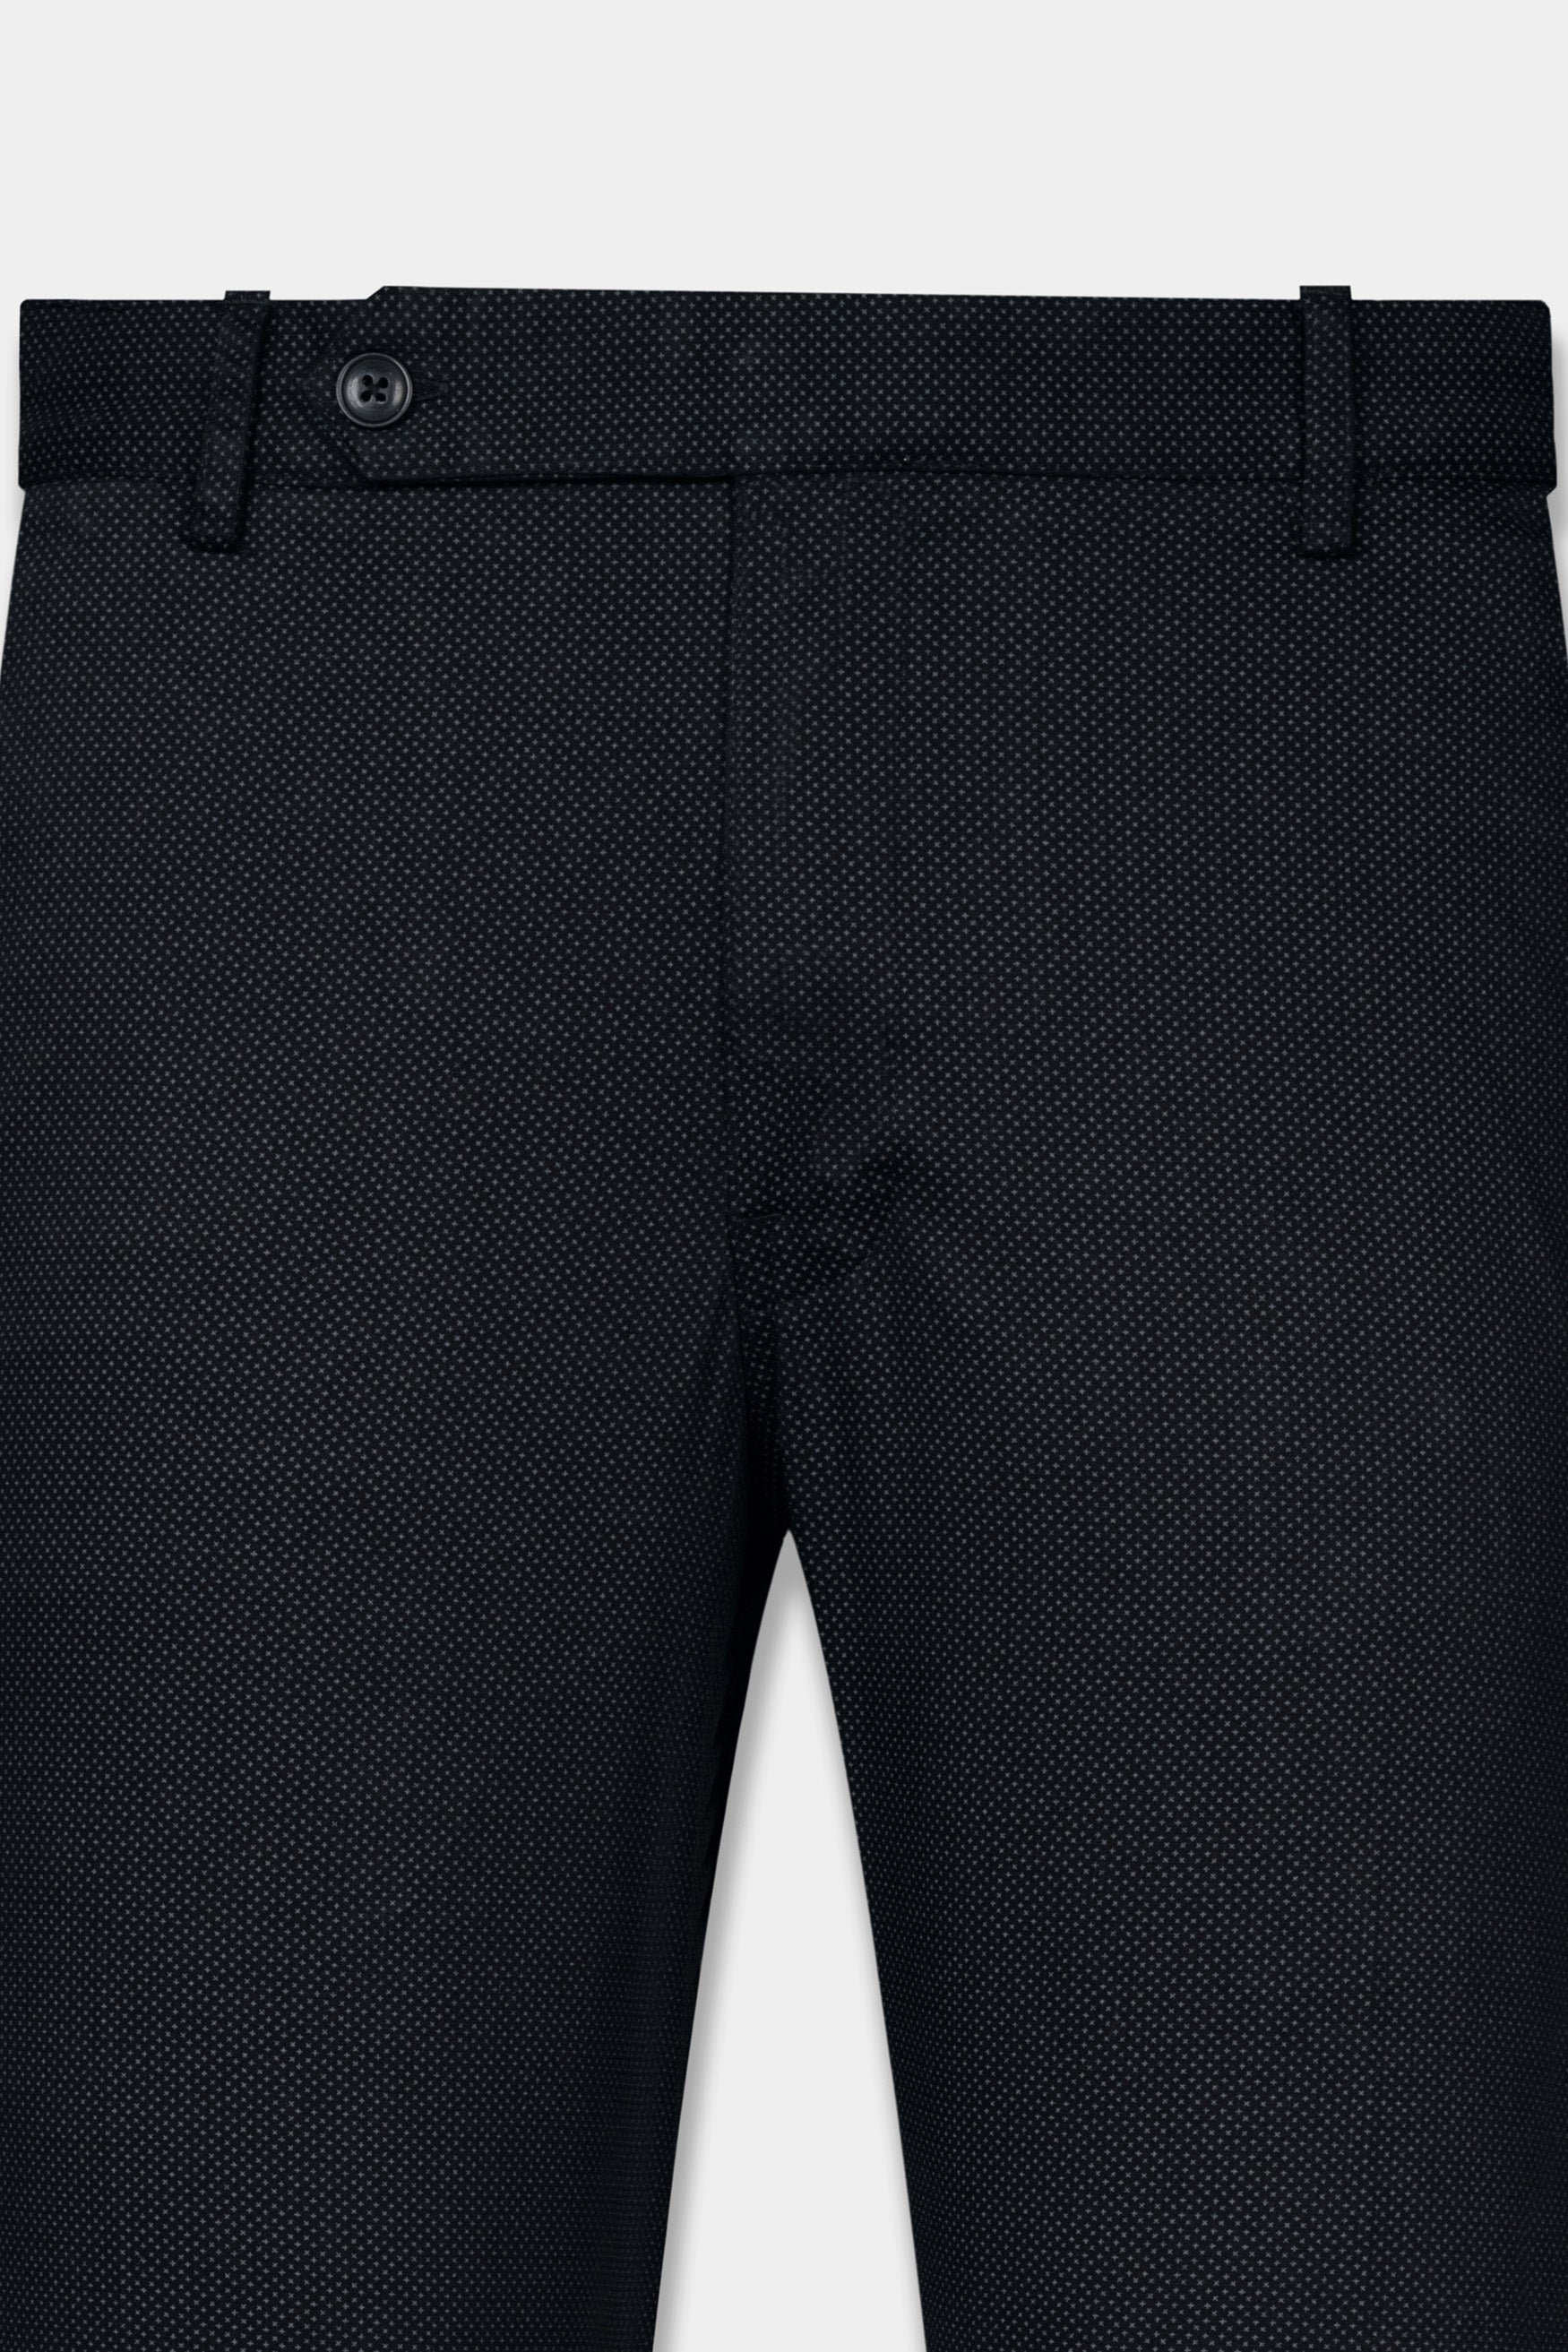 Bunker Black textured Premium cotton Chinos Pant